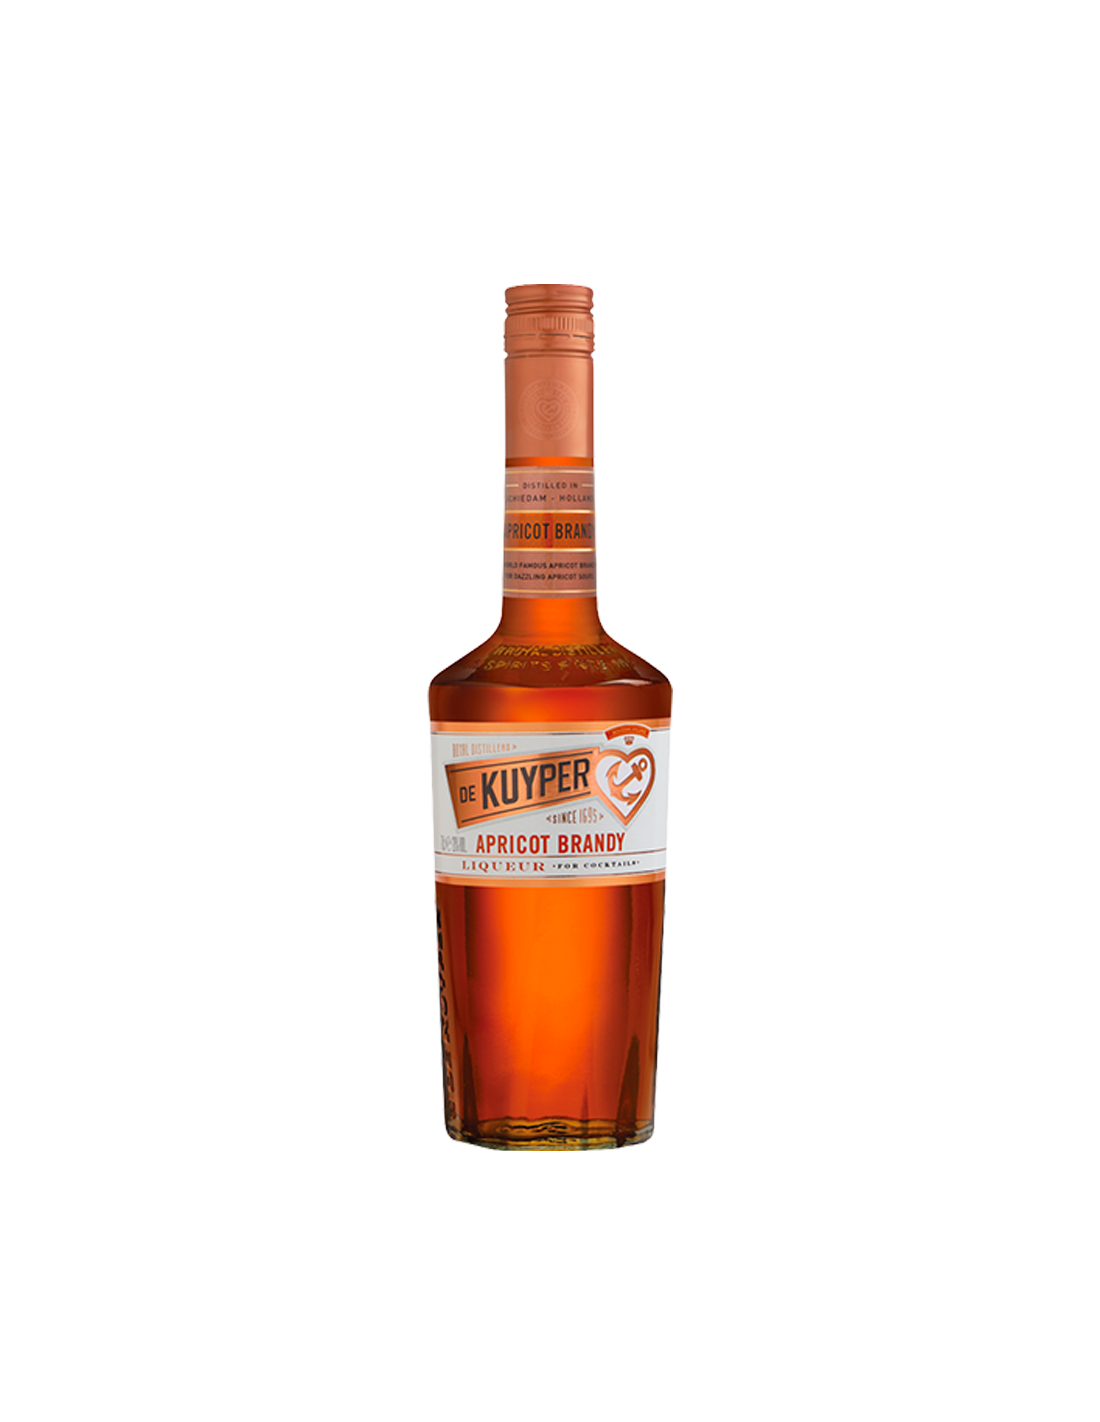 Lichior De Kuyper Apricot Brandy 20% alc., 0.7L, Olanda alcooldiscount.ro